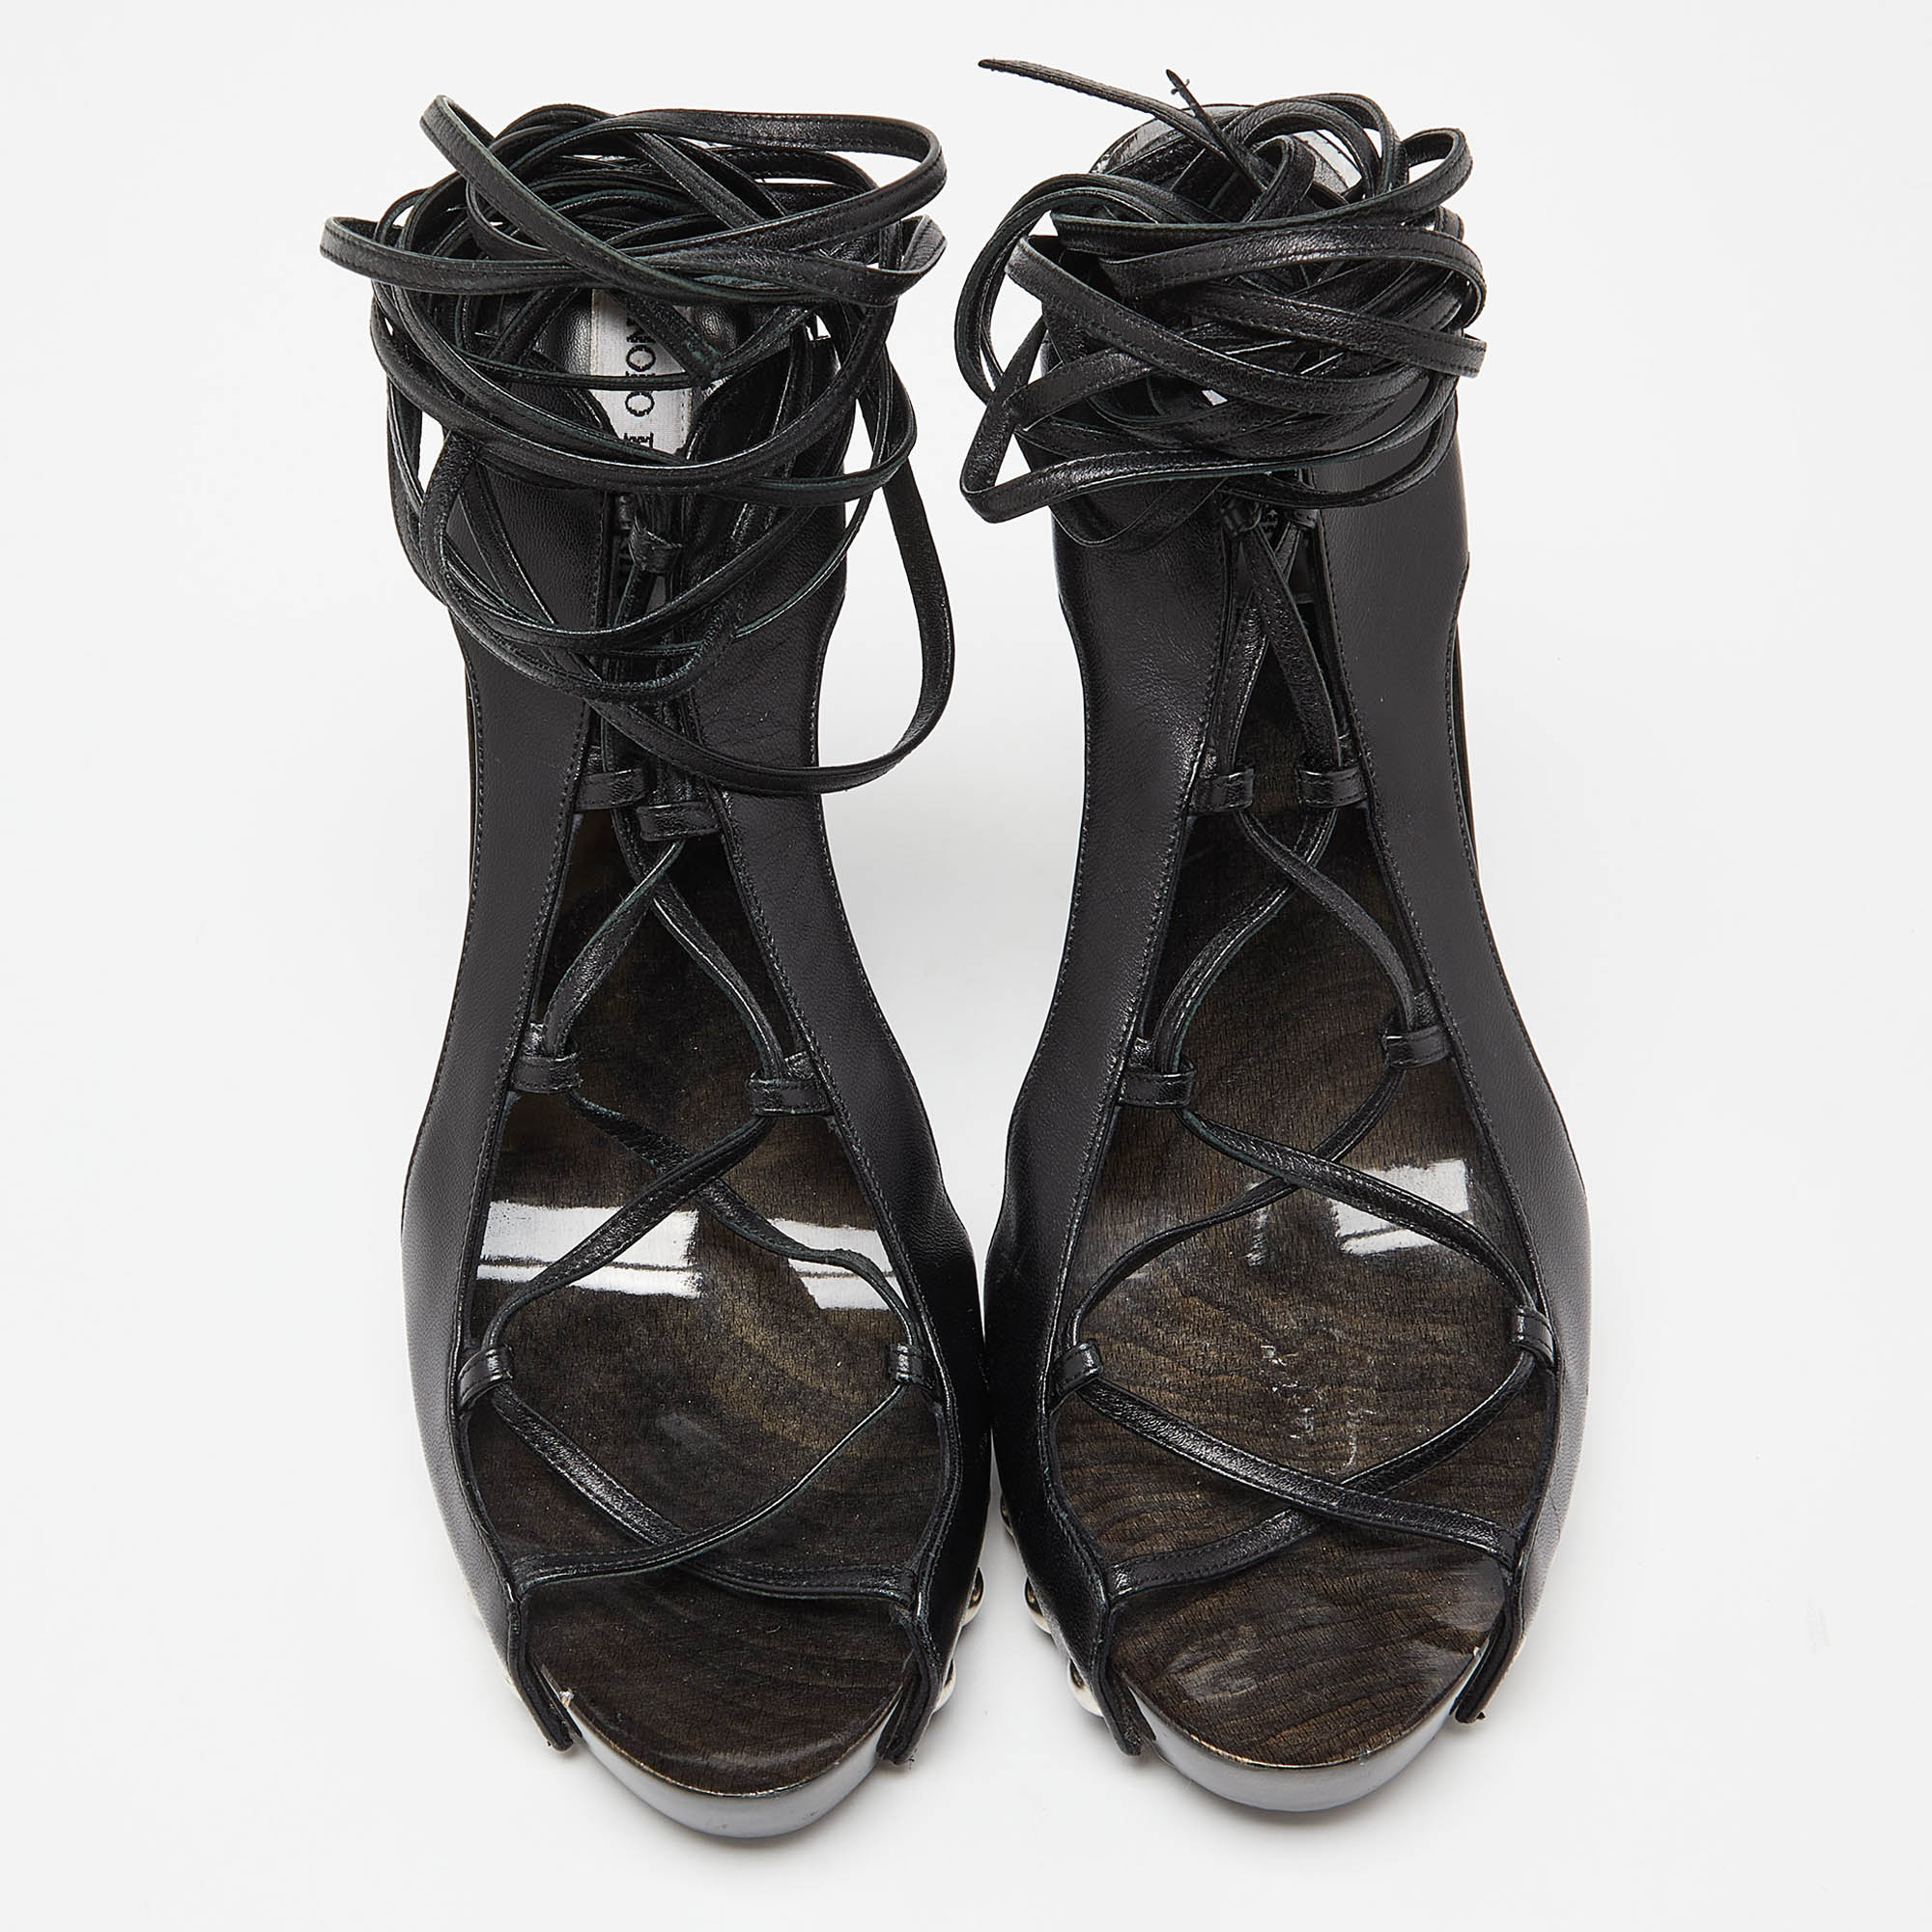 Manolo Blahnik Black Leather Ankle Wrap Sandals Size 41